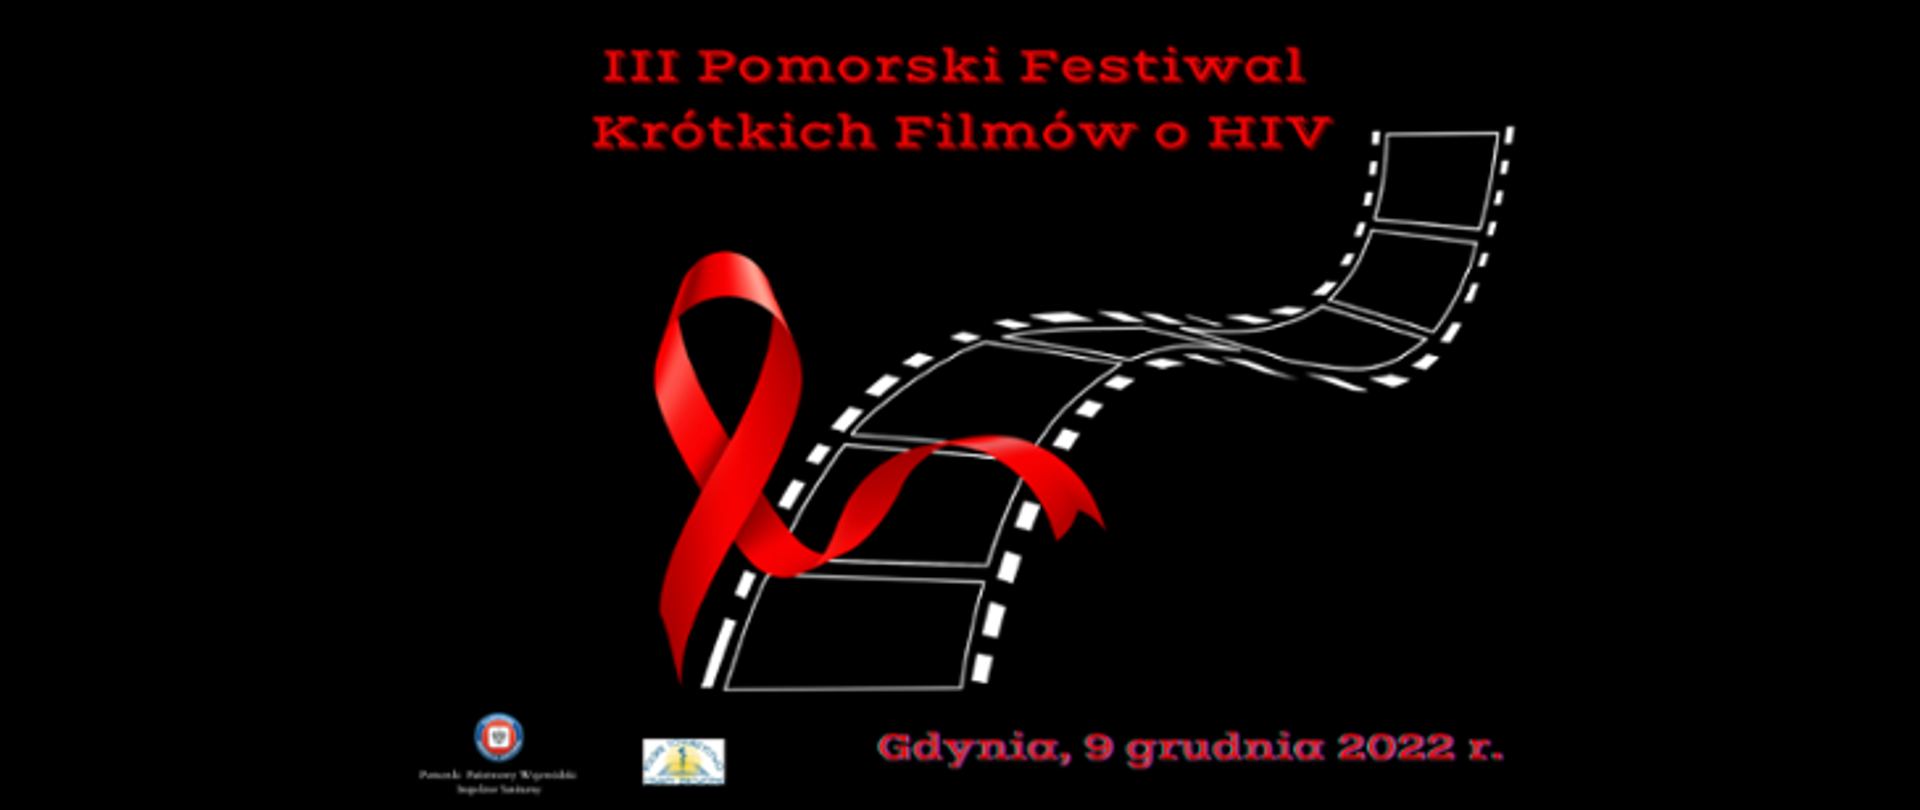 III Pomorski Festiwal Krótkich Filmów o HIV